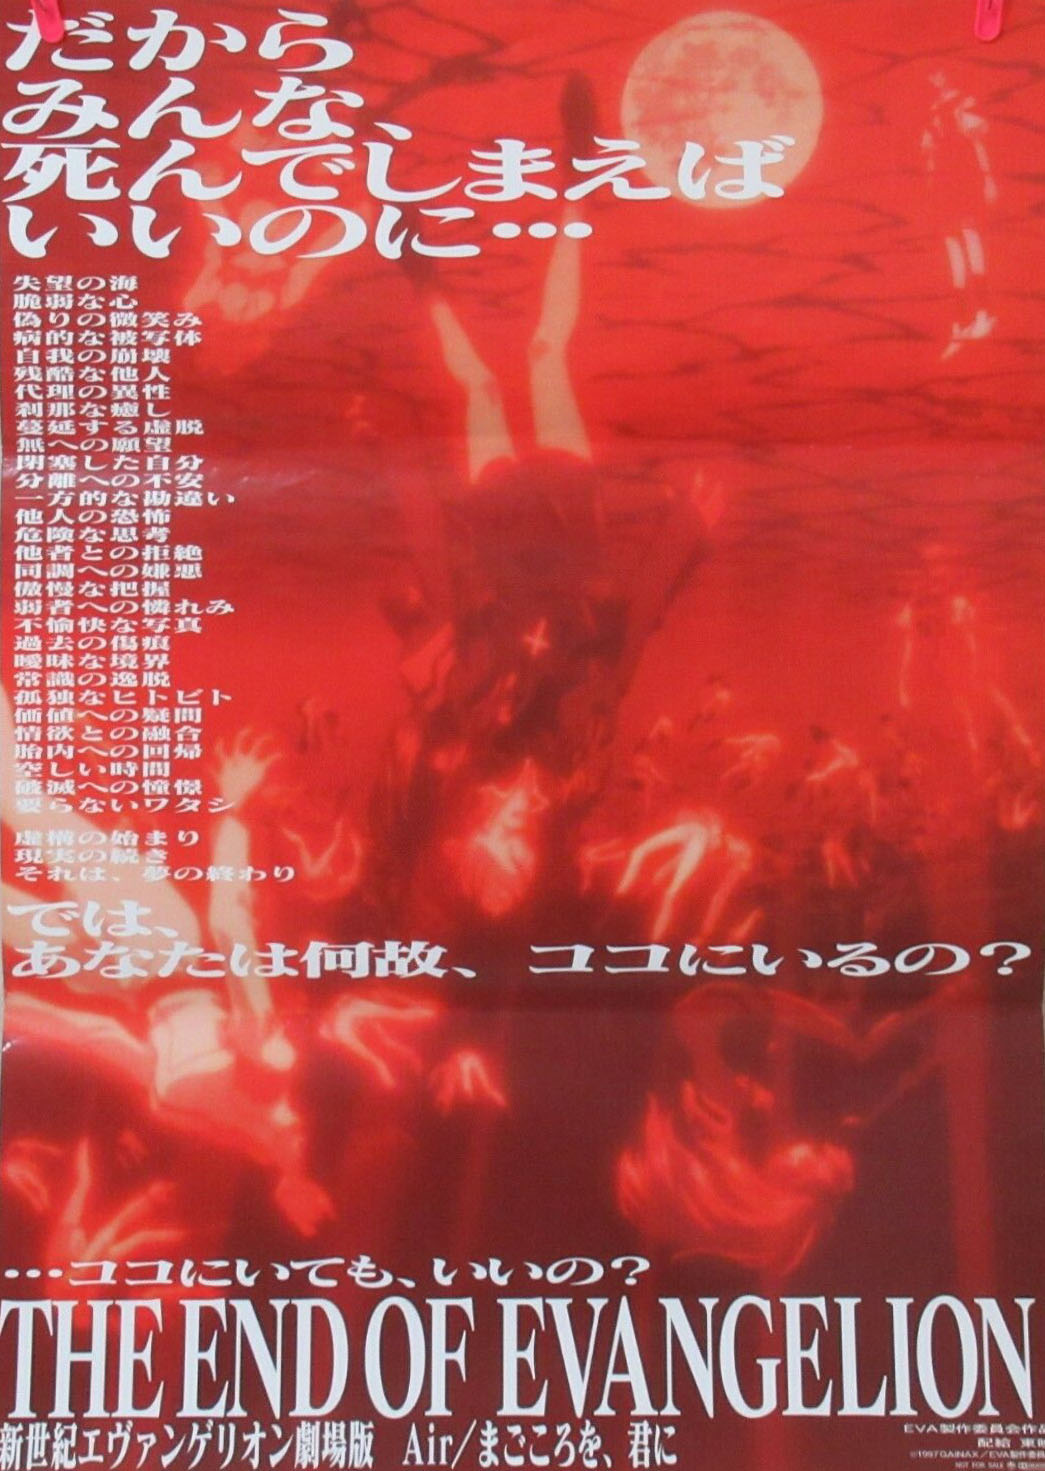 Details about   EVANGELION All Goods Catalog w/Poster Art Fan Book 1997 Japan KD88* 